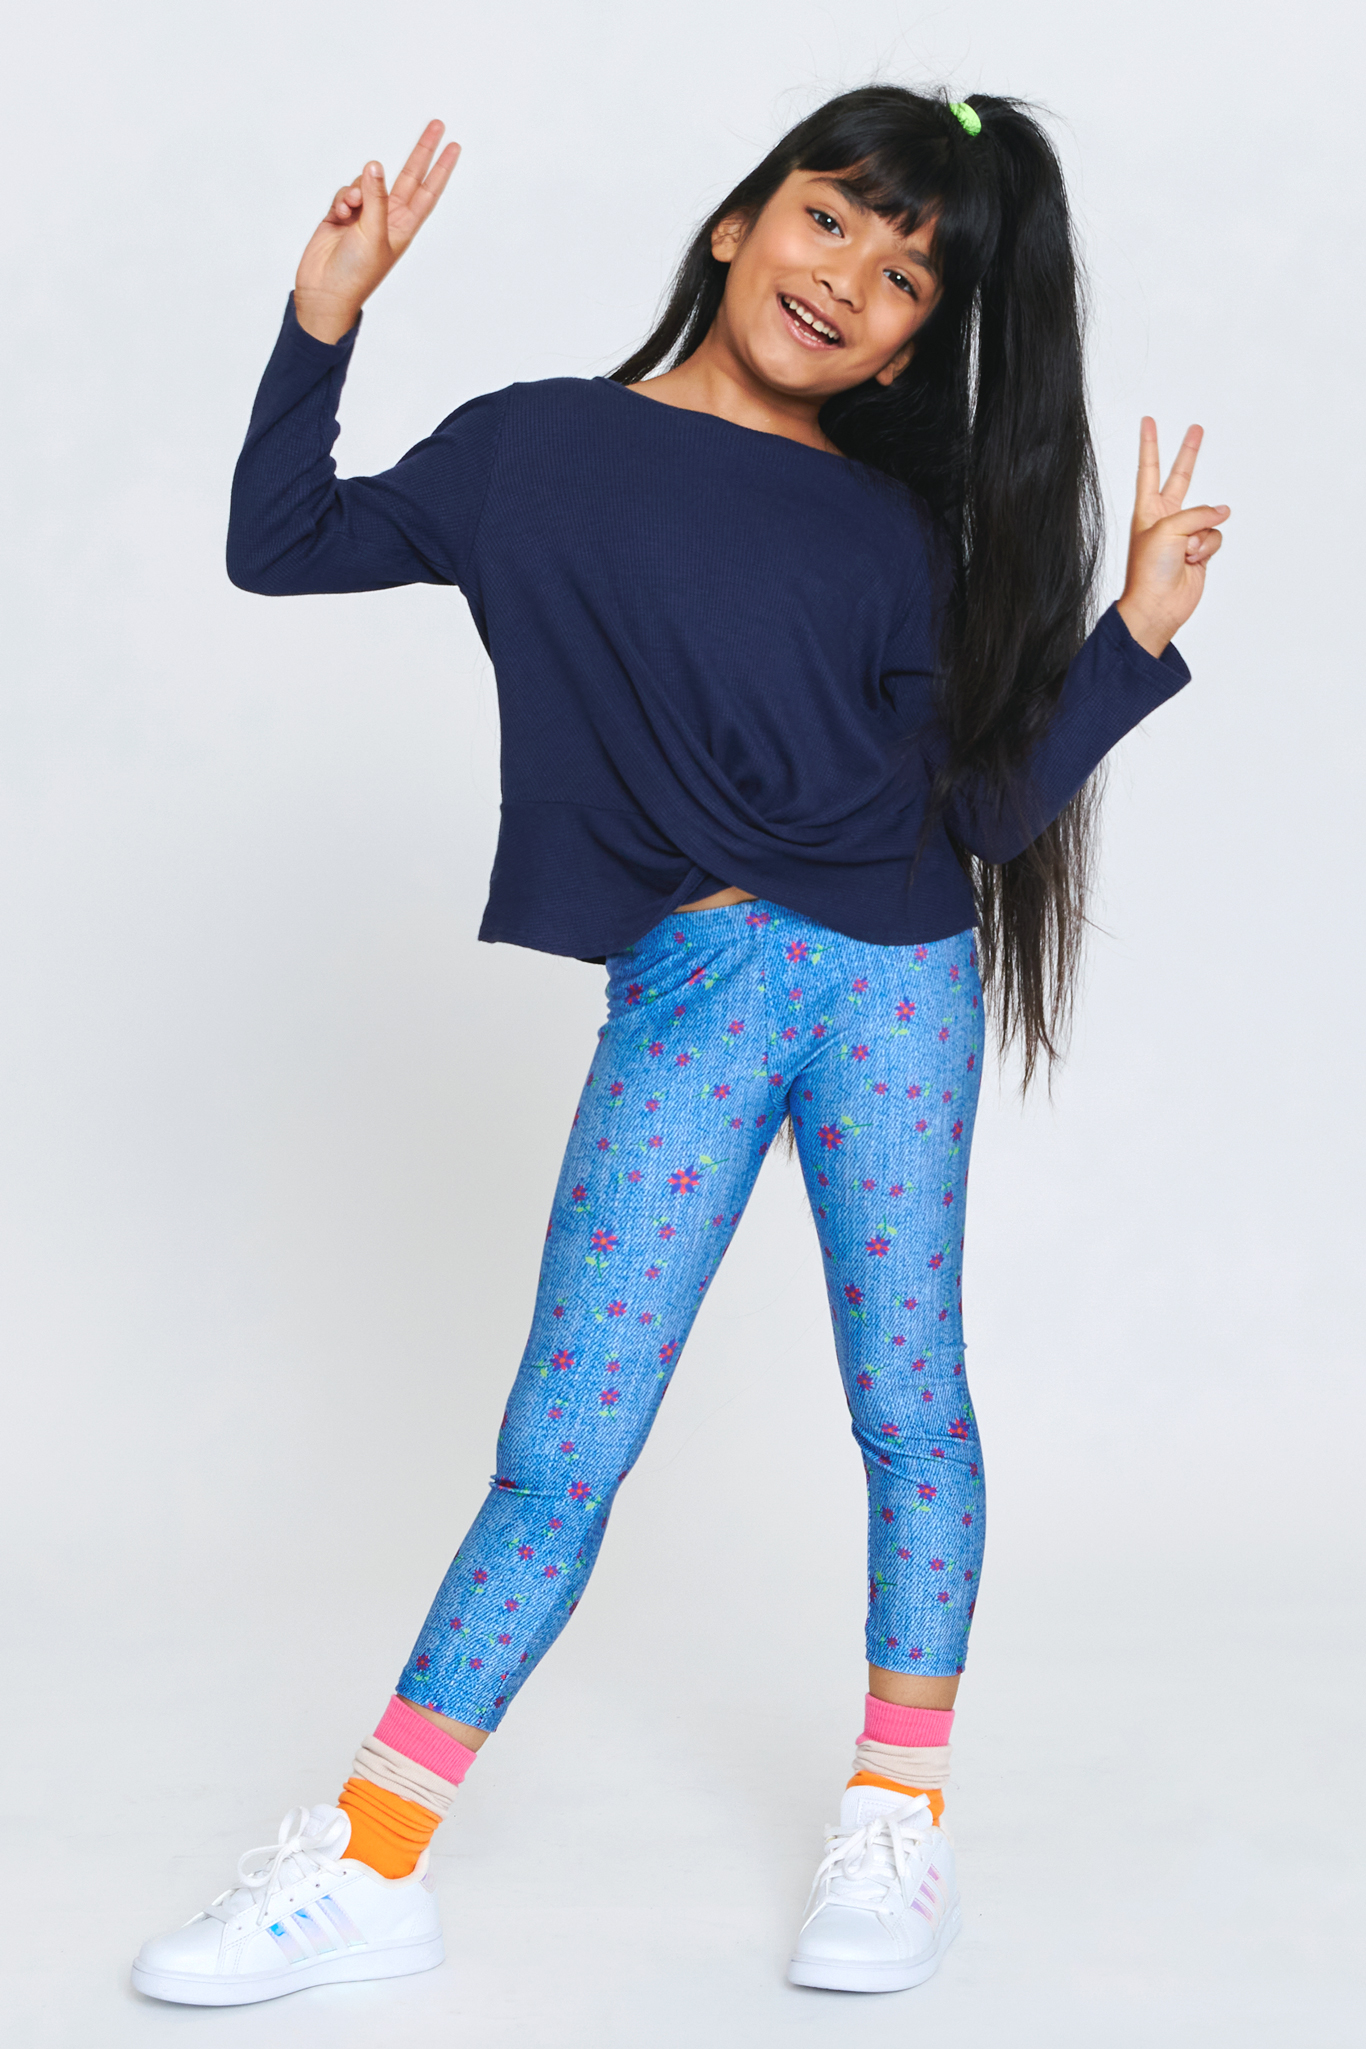 $58 Terez Kids Girl's Purple Flower Print Leggings Pants Size 4